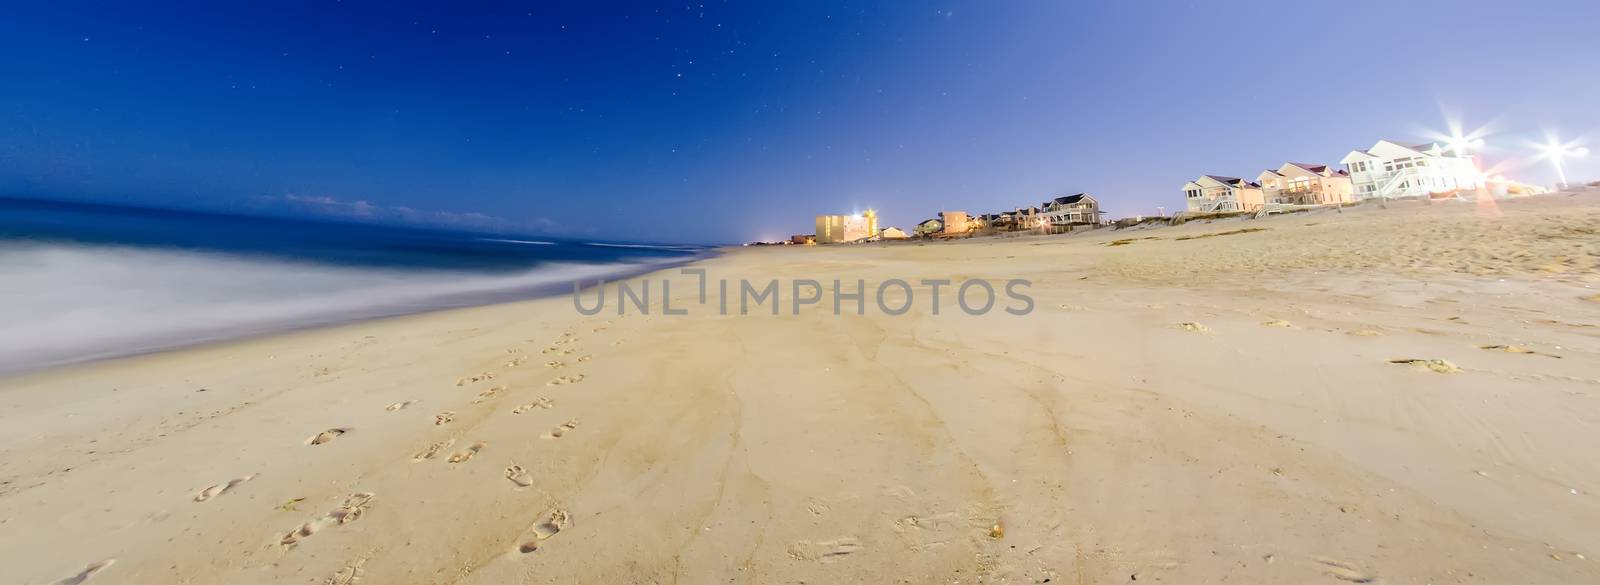 destin florida night beach scenes by digidreamgrafix